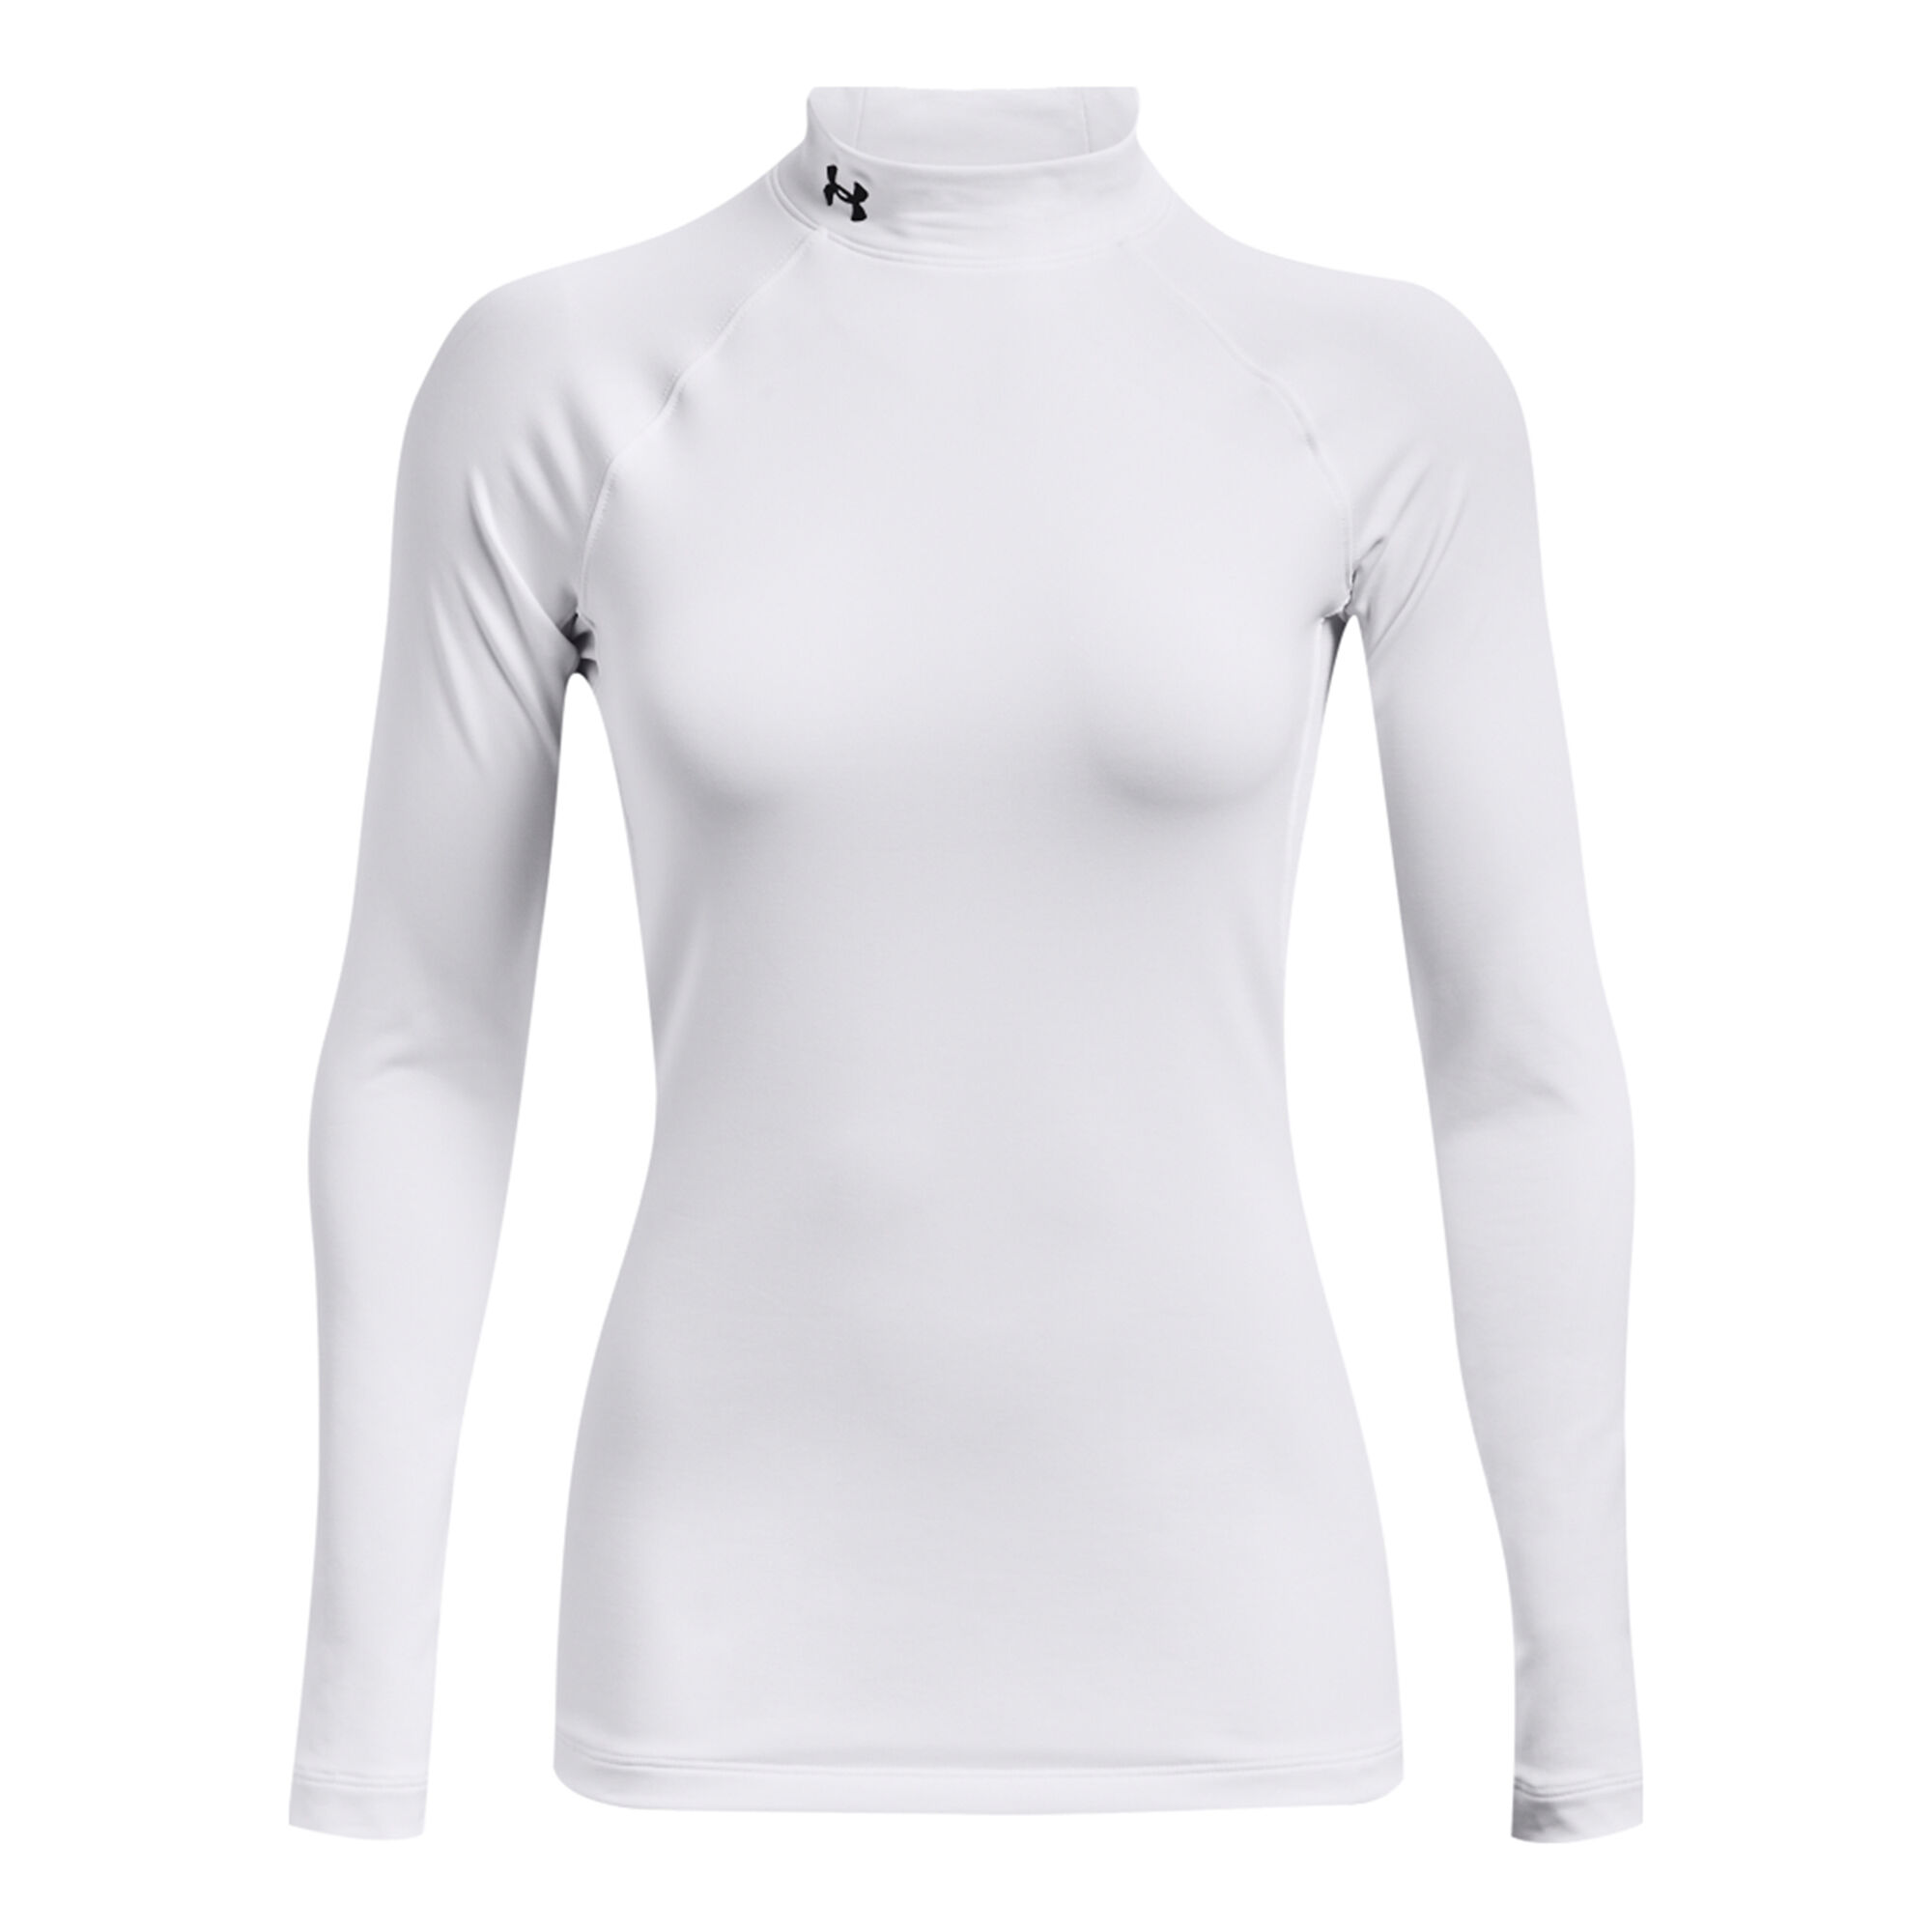 Buy Under Armour Coldgear Authentics Mockneck Long Sleeve Women White  online